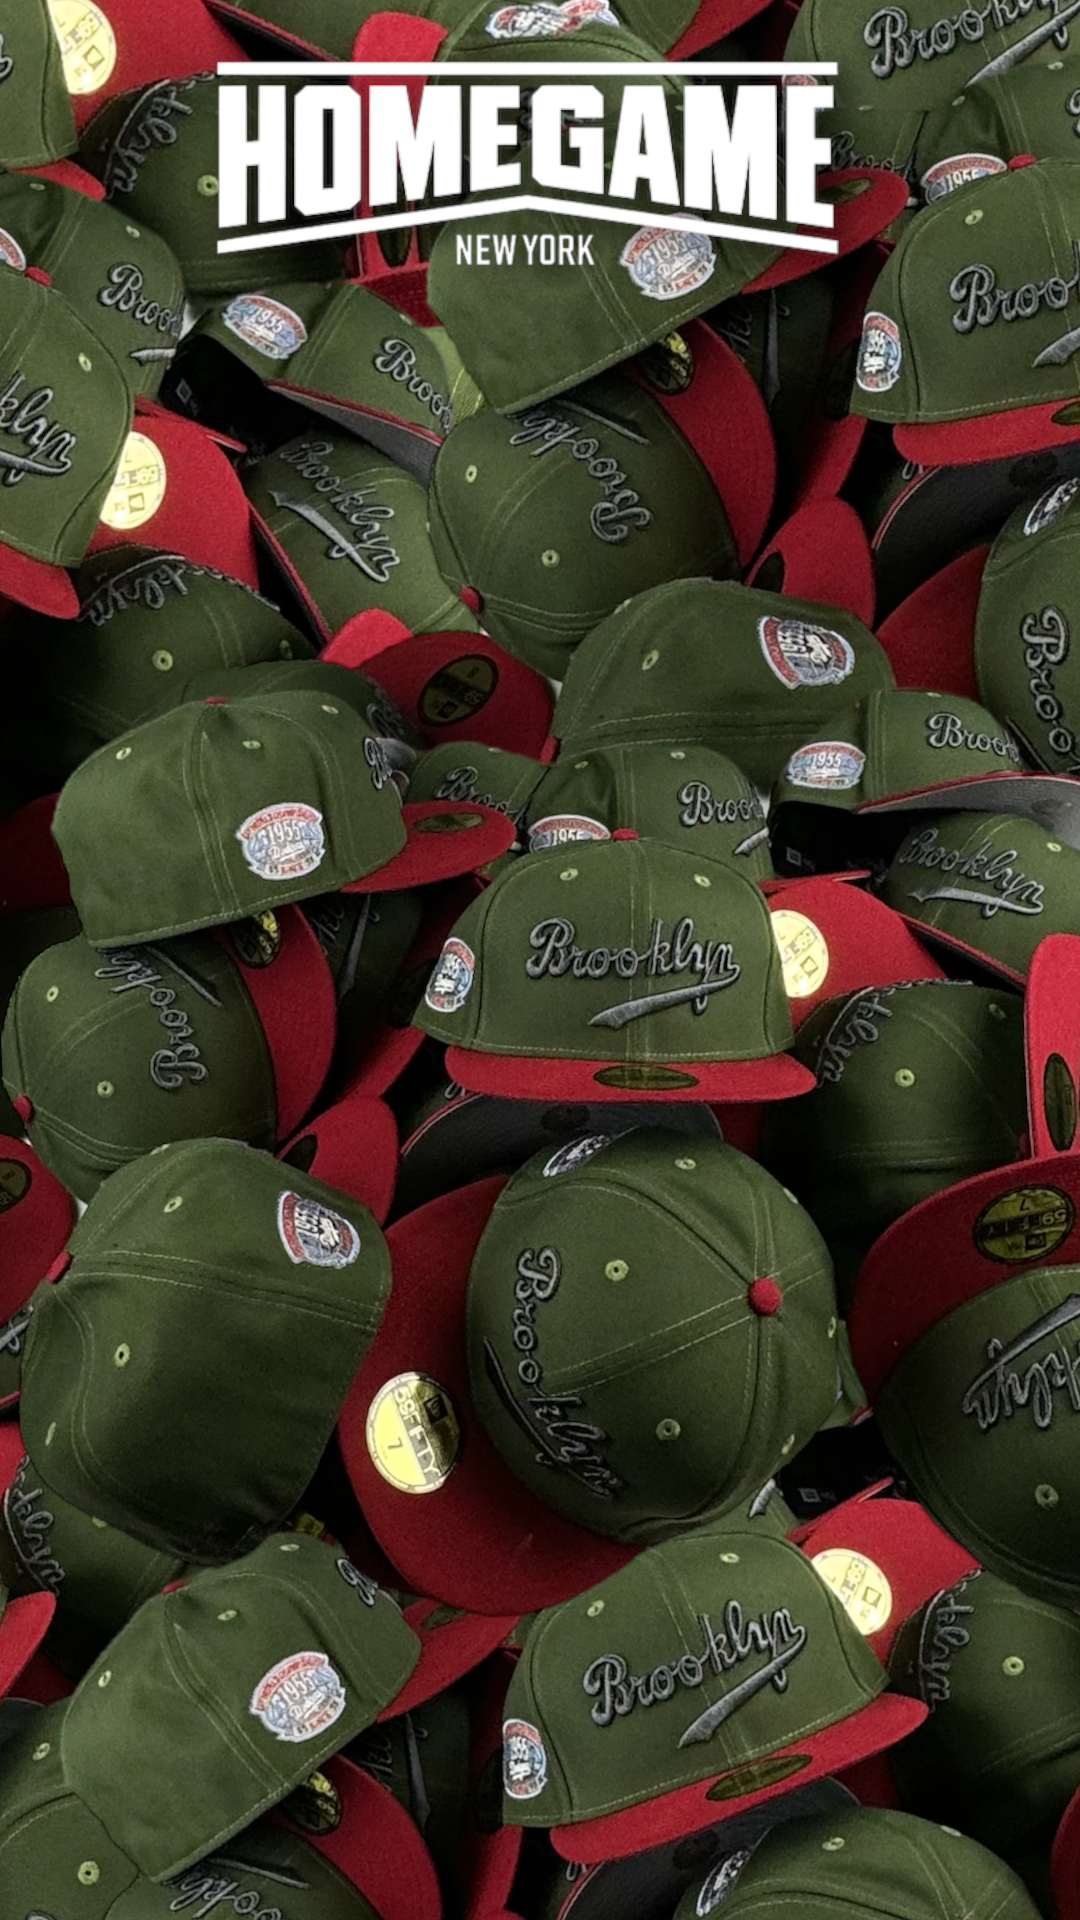 Brooklyn Dodgers 1955 World Championship Rifle Green/Heather Red New Era 59Fifty Hat